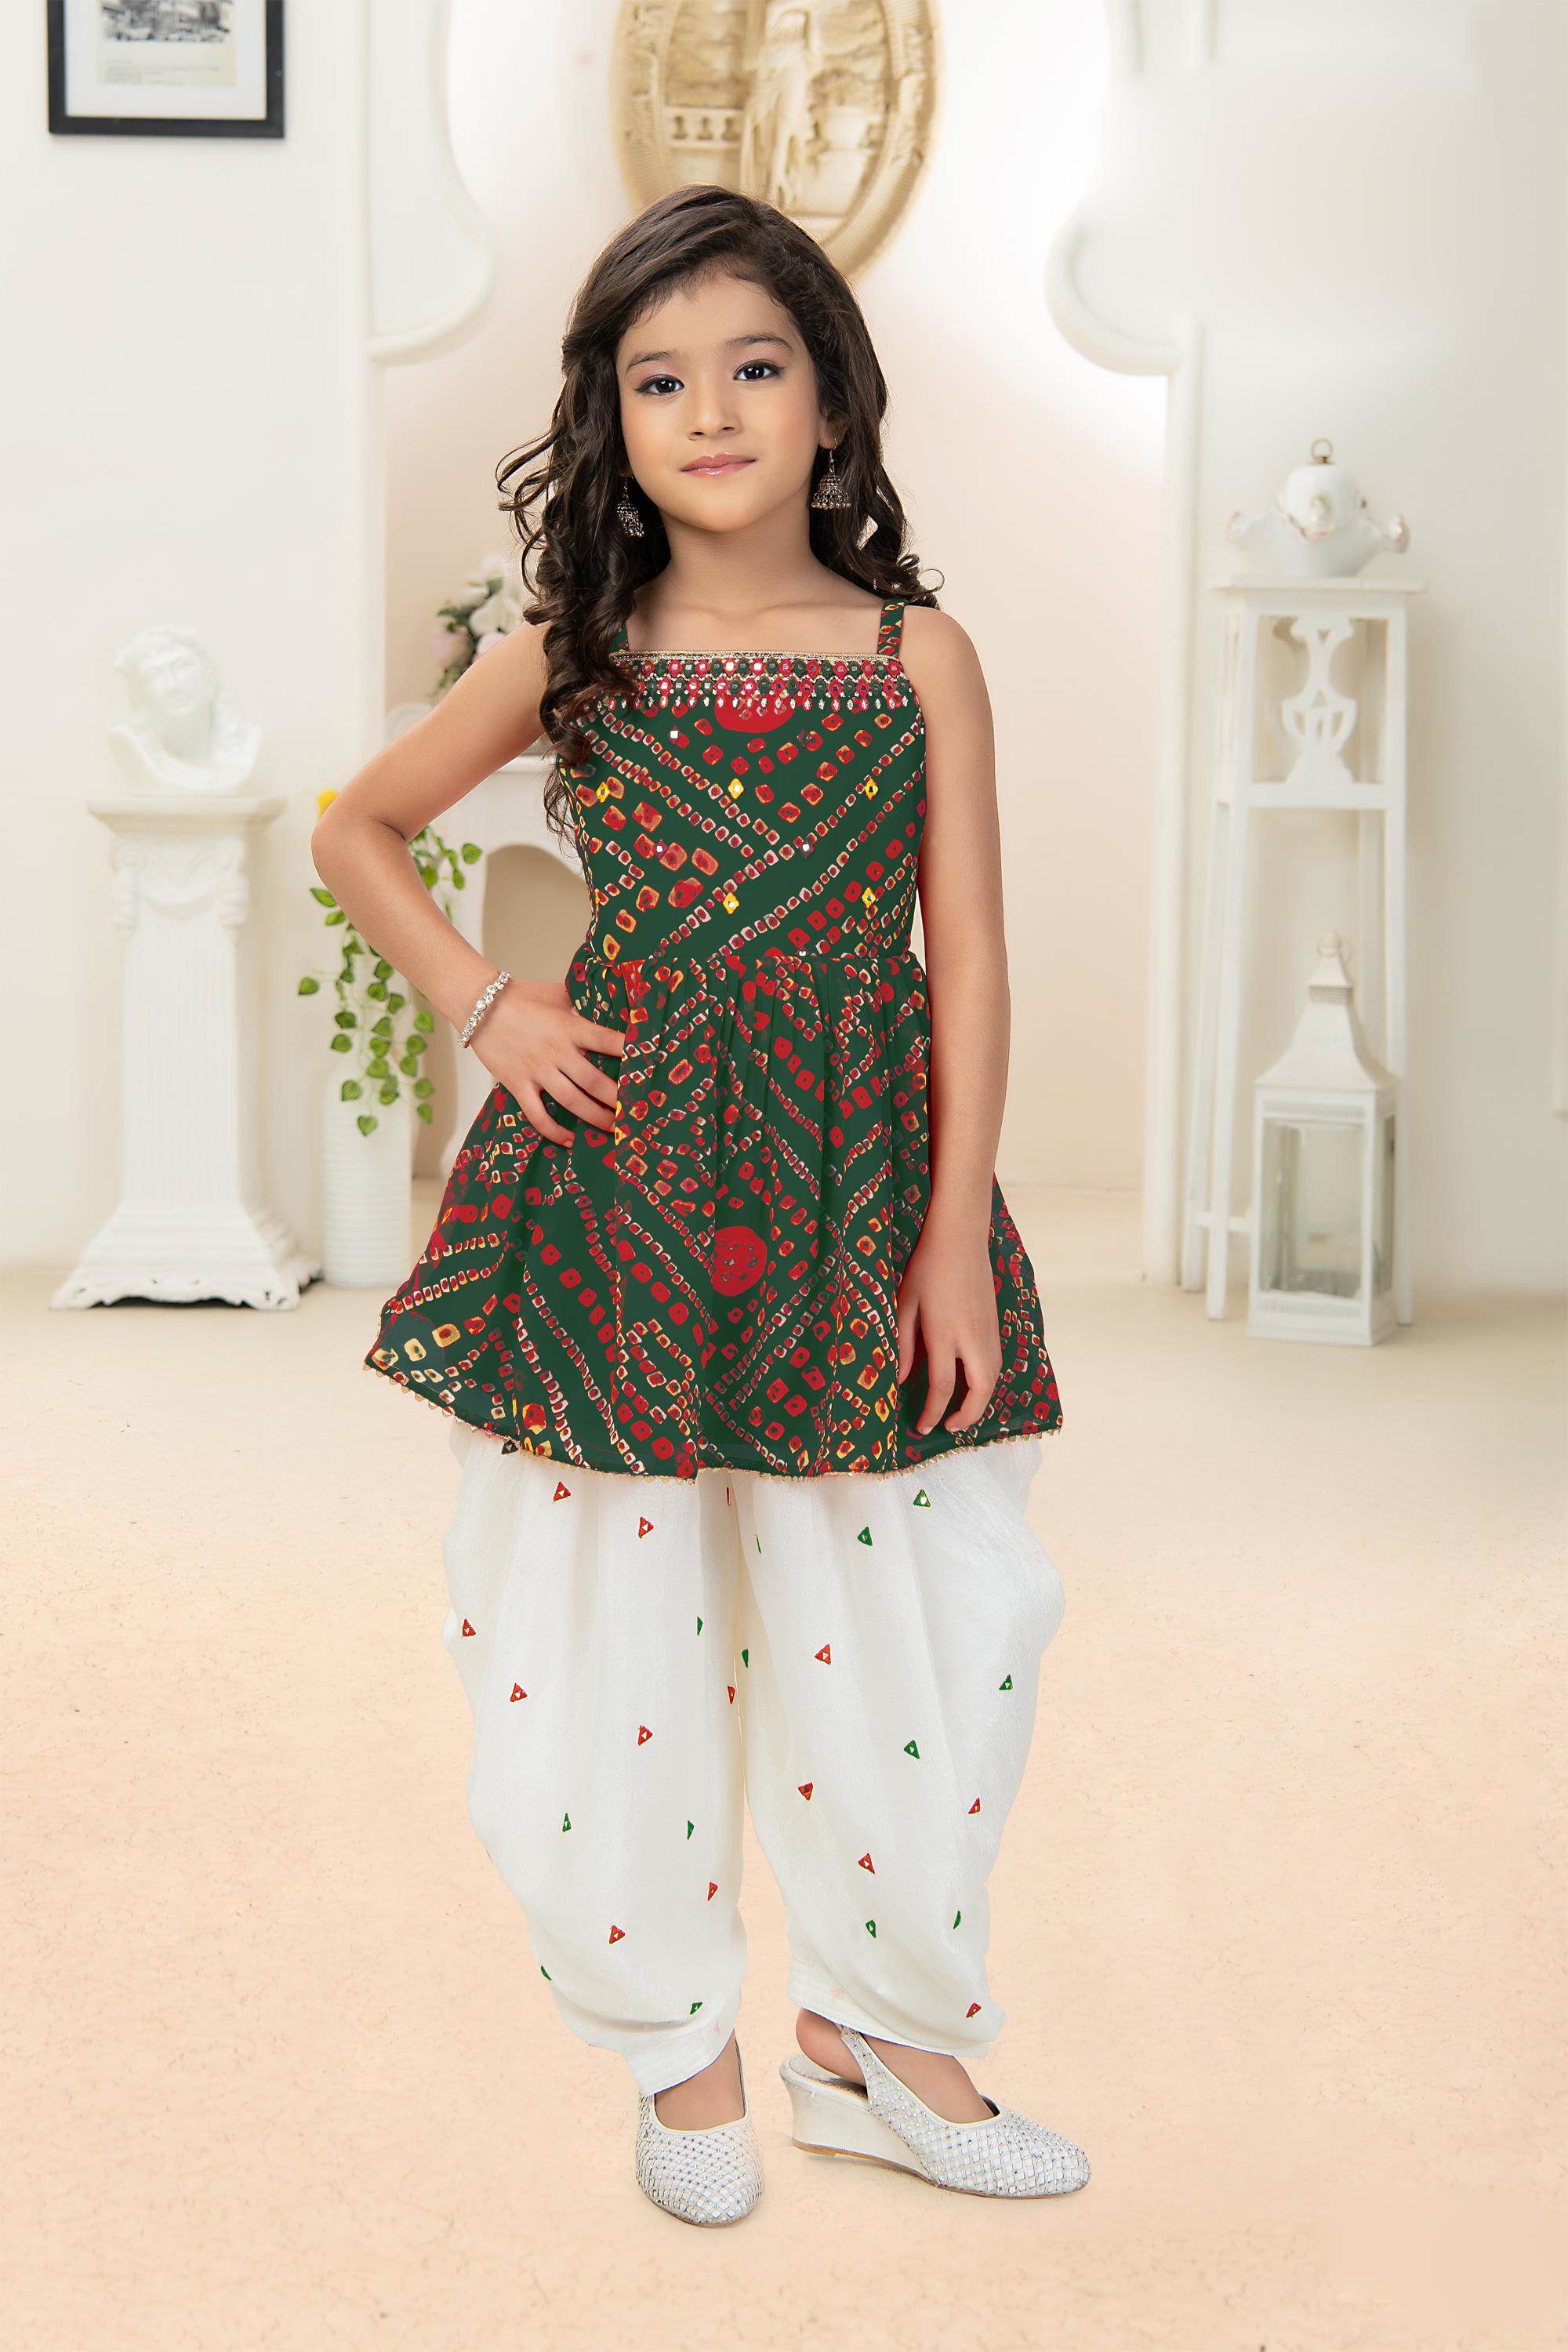 Buy Printed Salwar Suit for Girls Online | G3fashion.com